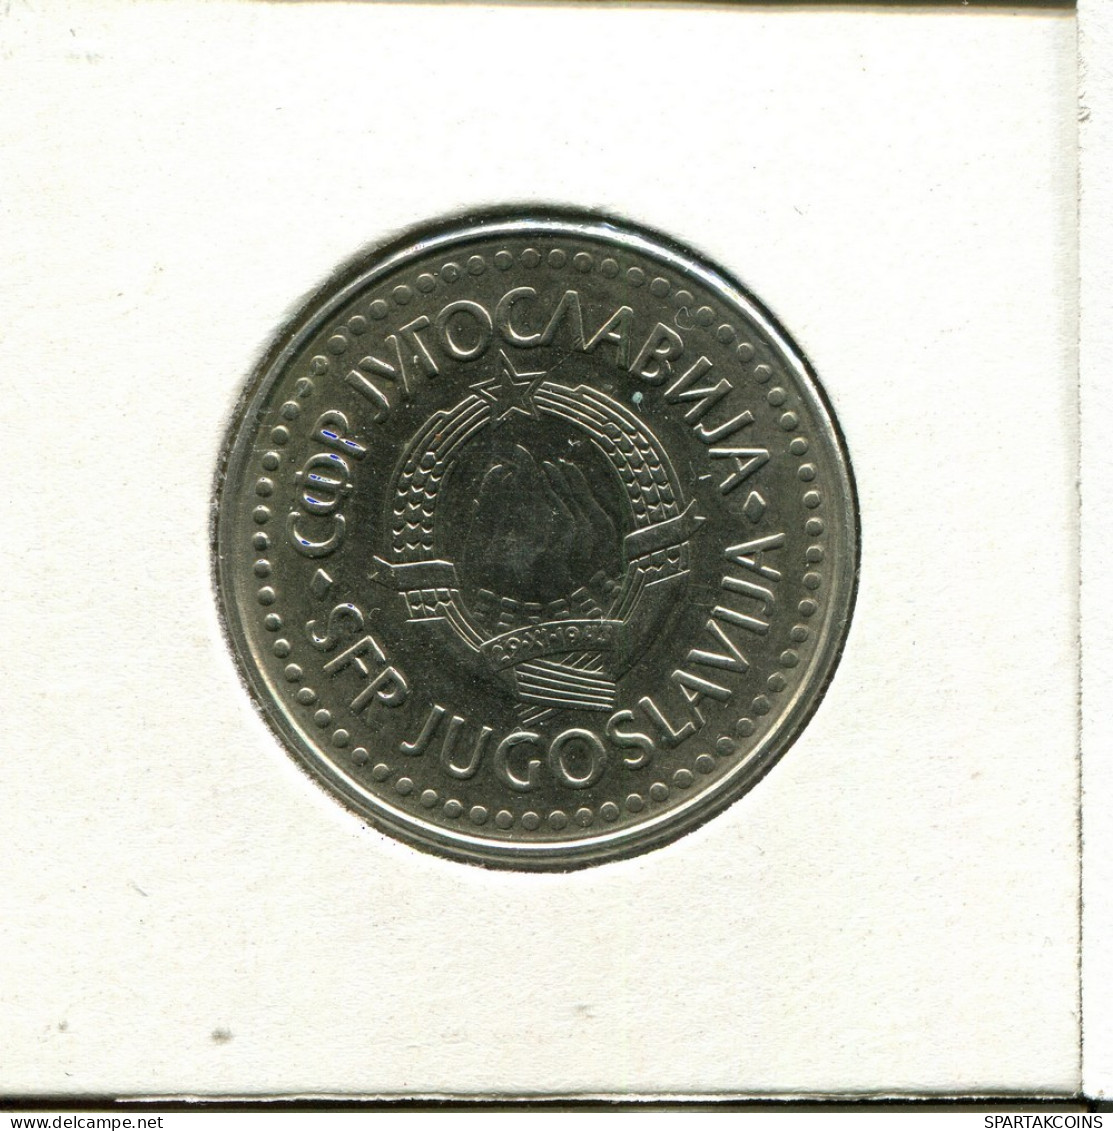 100 DINARA 1987 YUGOSLAVIA Moneda #AV170.E.A - Yougoslavie